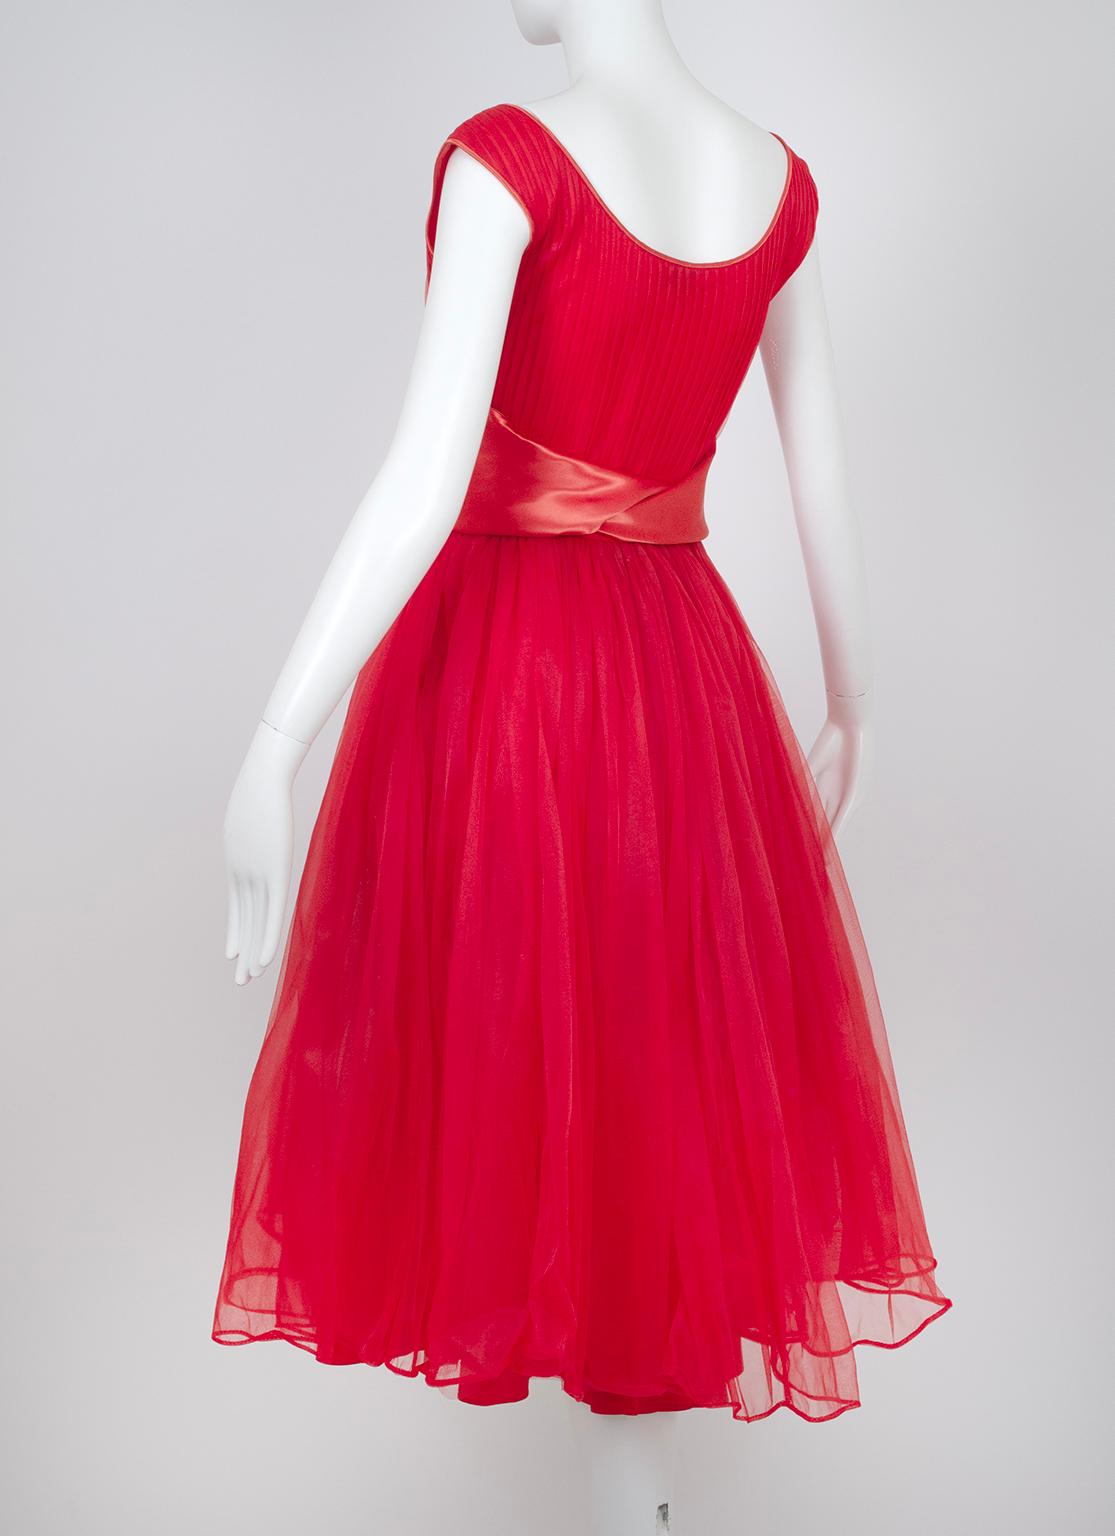 Emma Domb Red Bib Front Ballerina Party Dress with Satin Cummerbund – S, 1950s For Sale 2